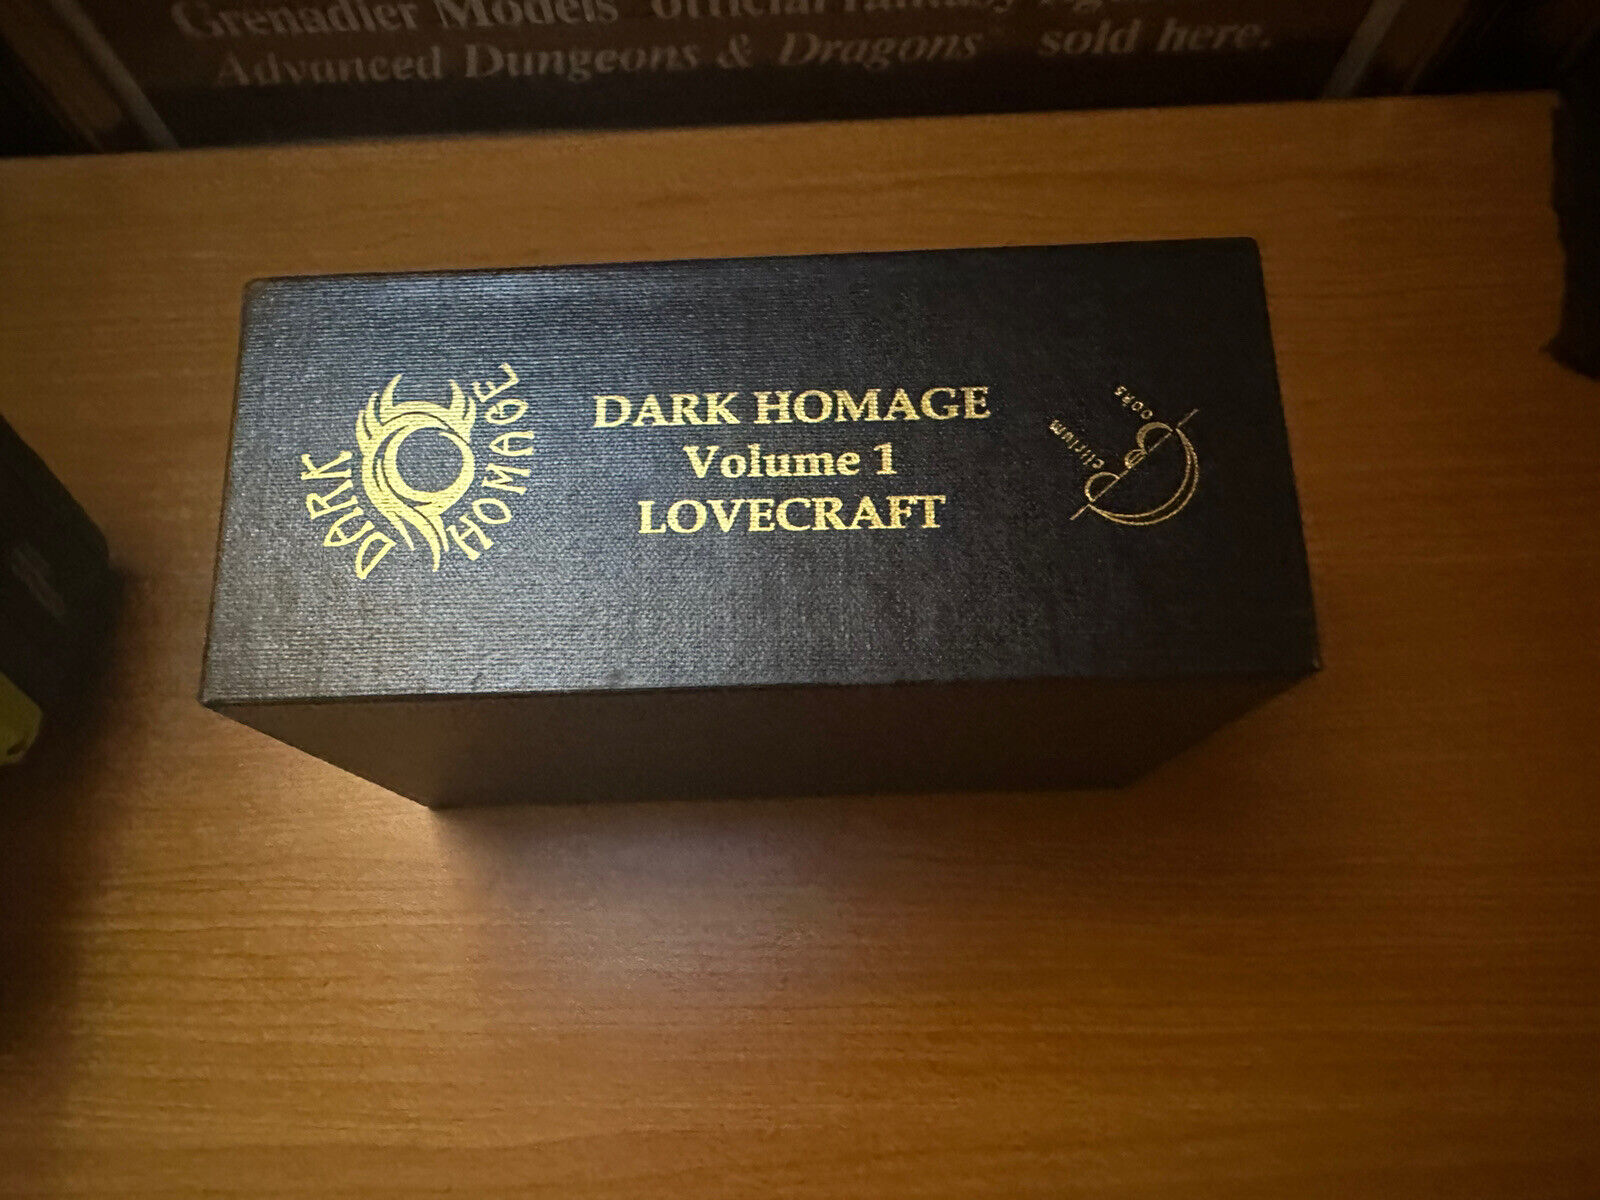 Dark Homage, Volume 1: Lovecraft Number 36 Of 100 Limited Sets Produced